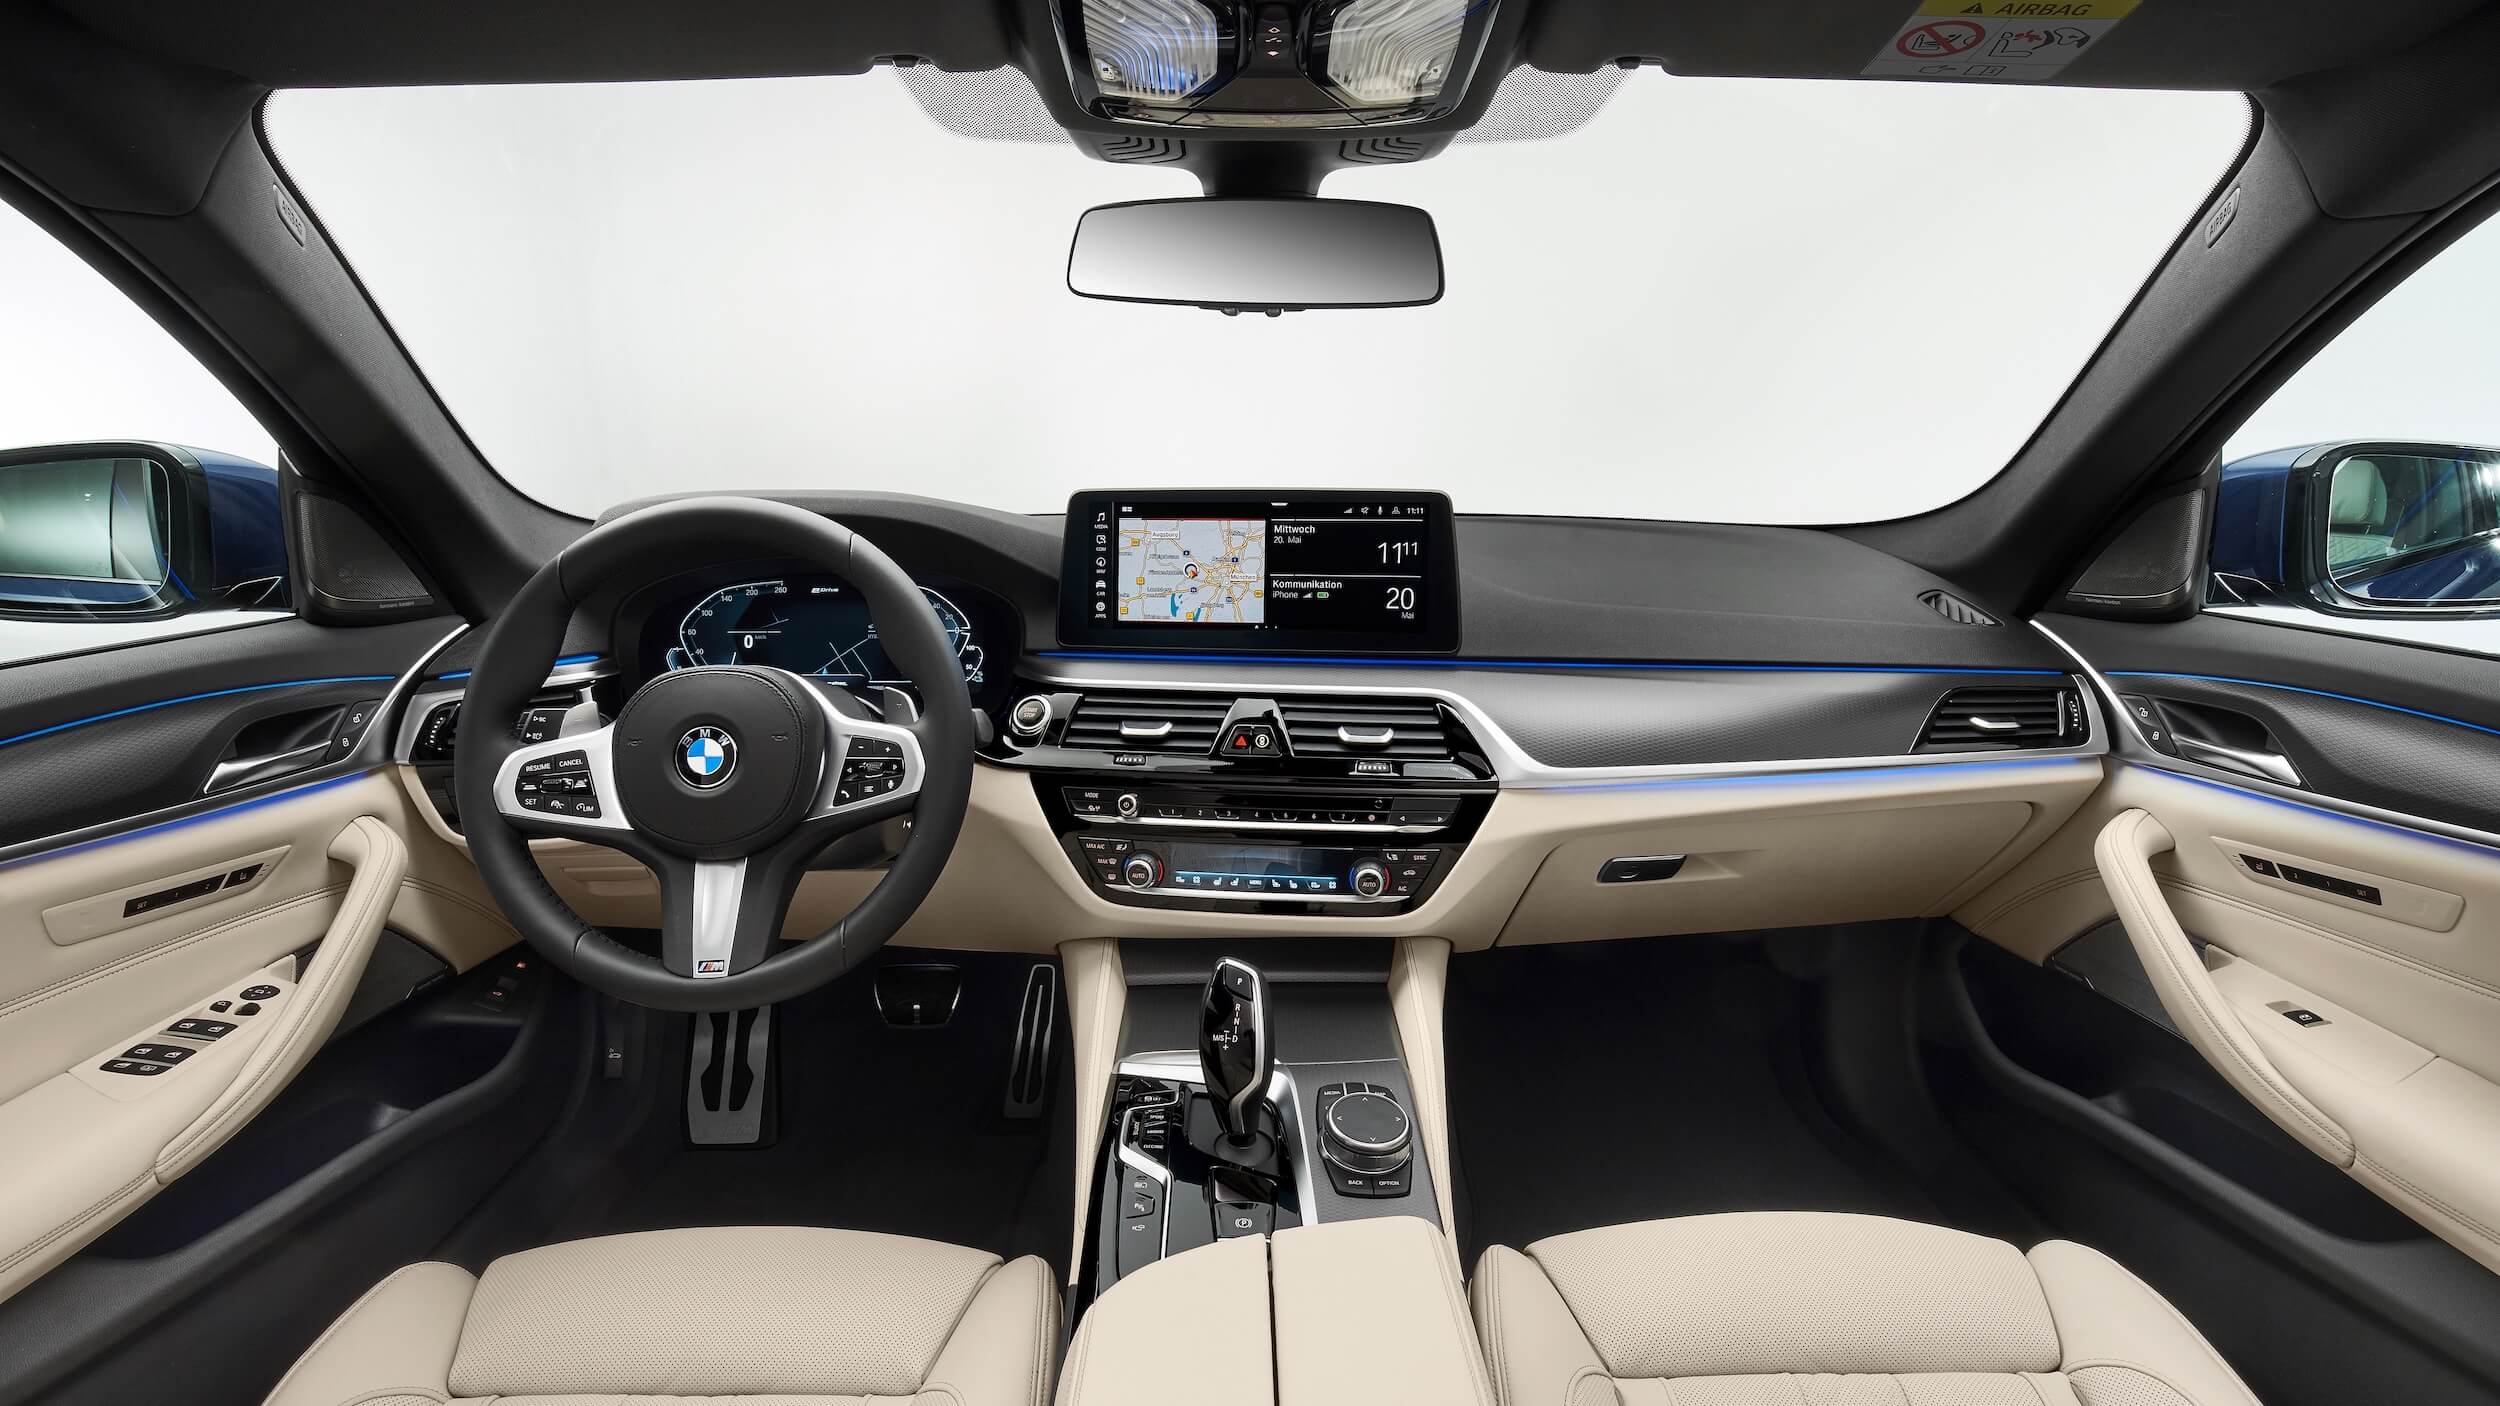 BMW 530e G30 facelift dashboard